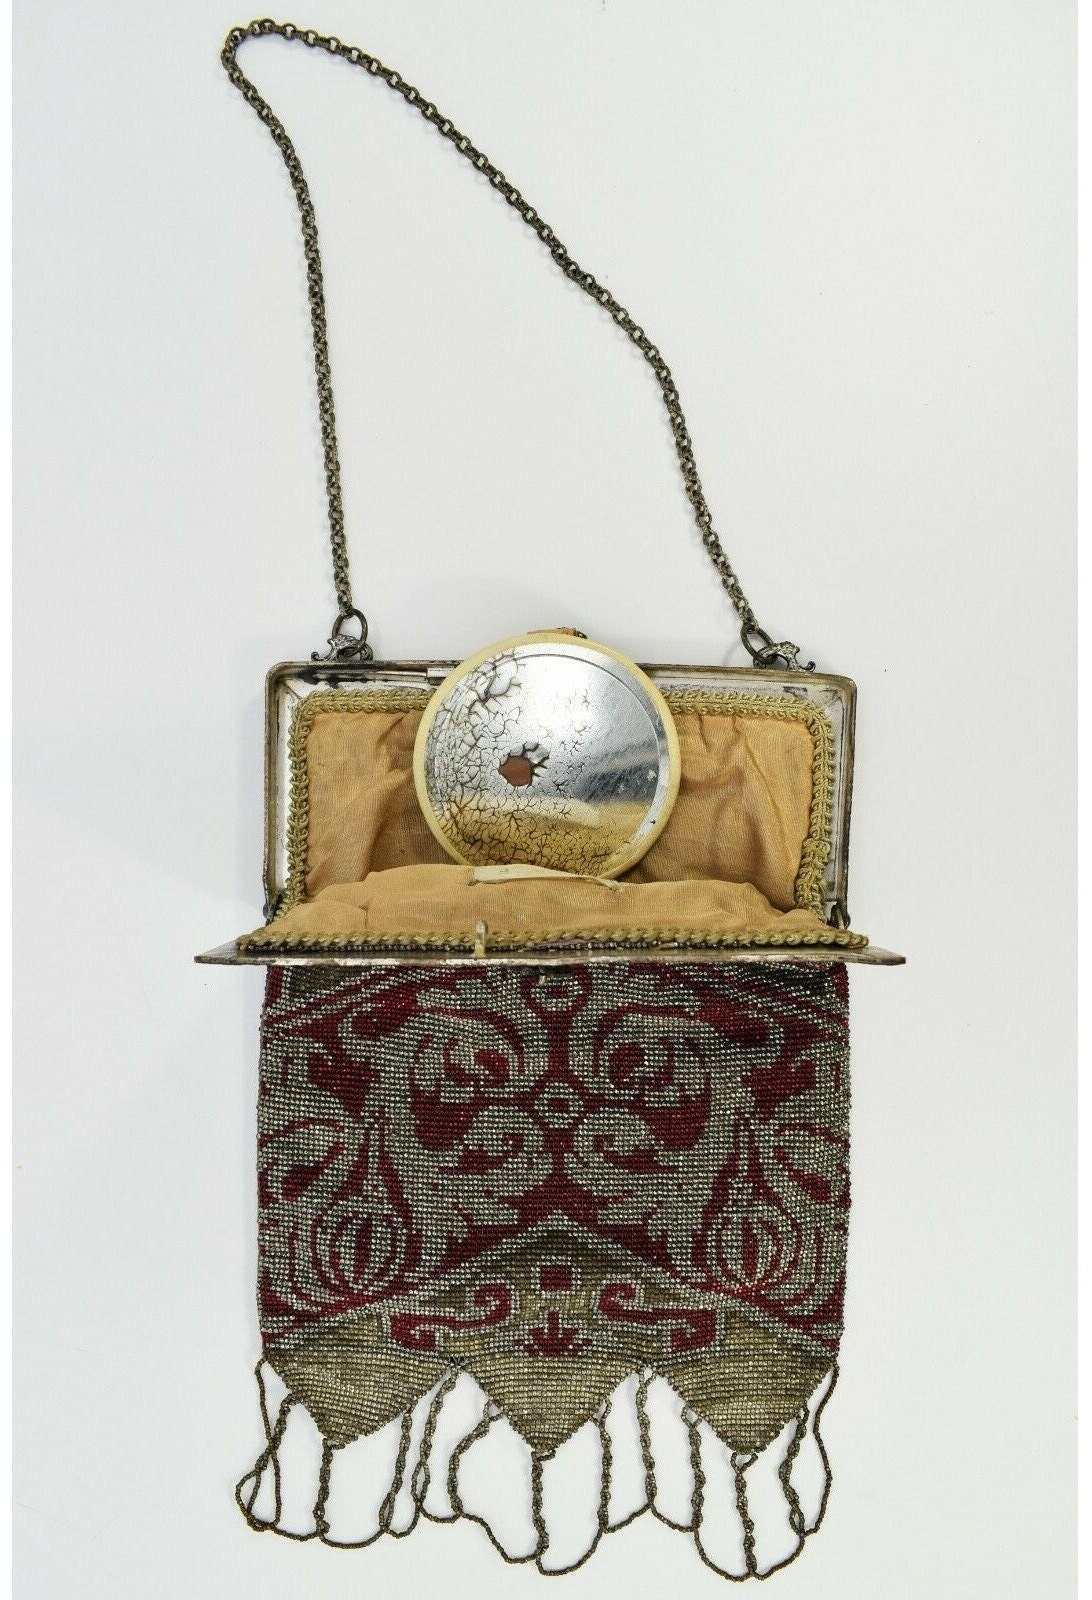 Milady's Vanity Vintage and Antique Beaded Bags Under $1,000 Index